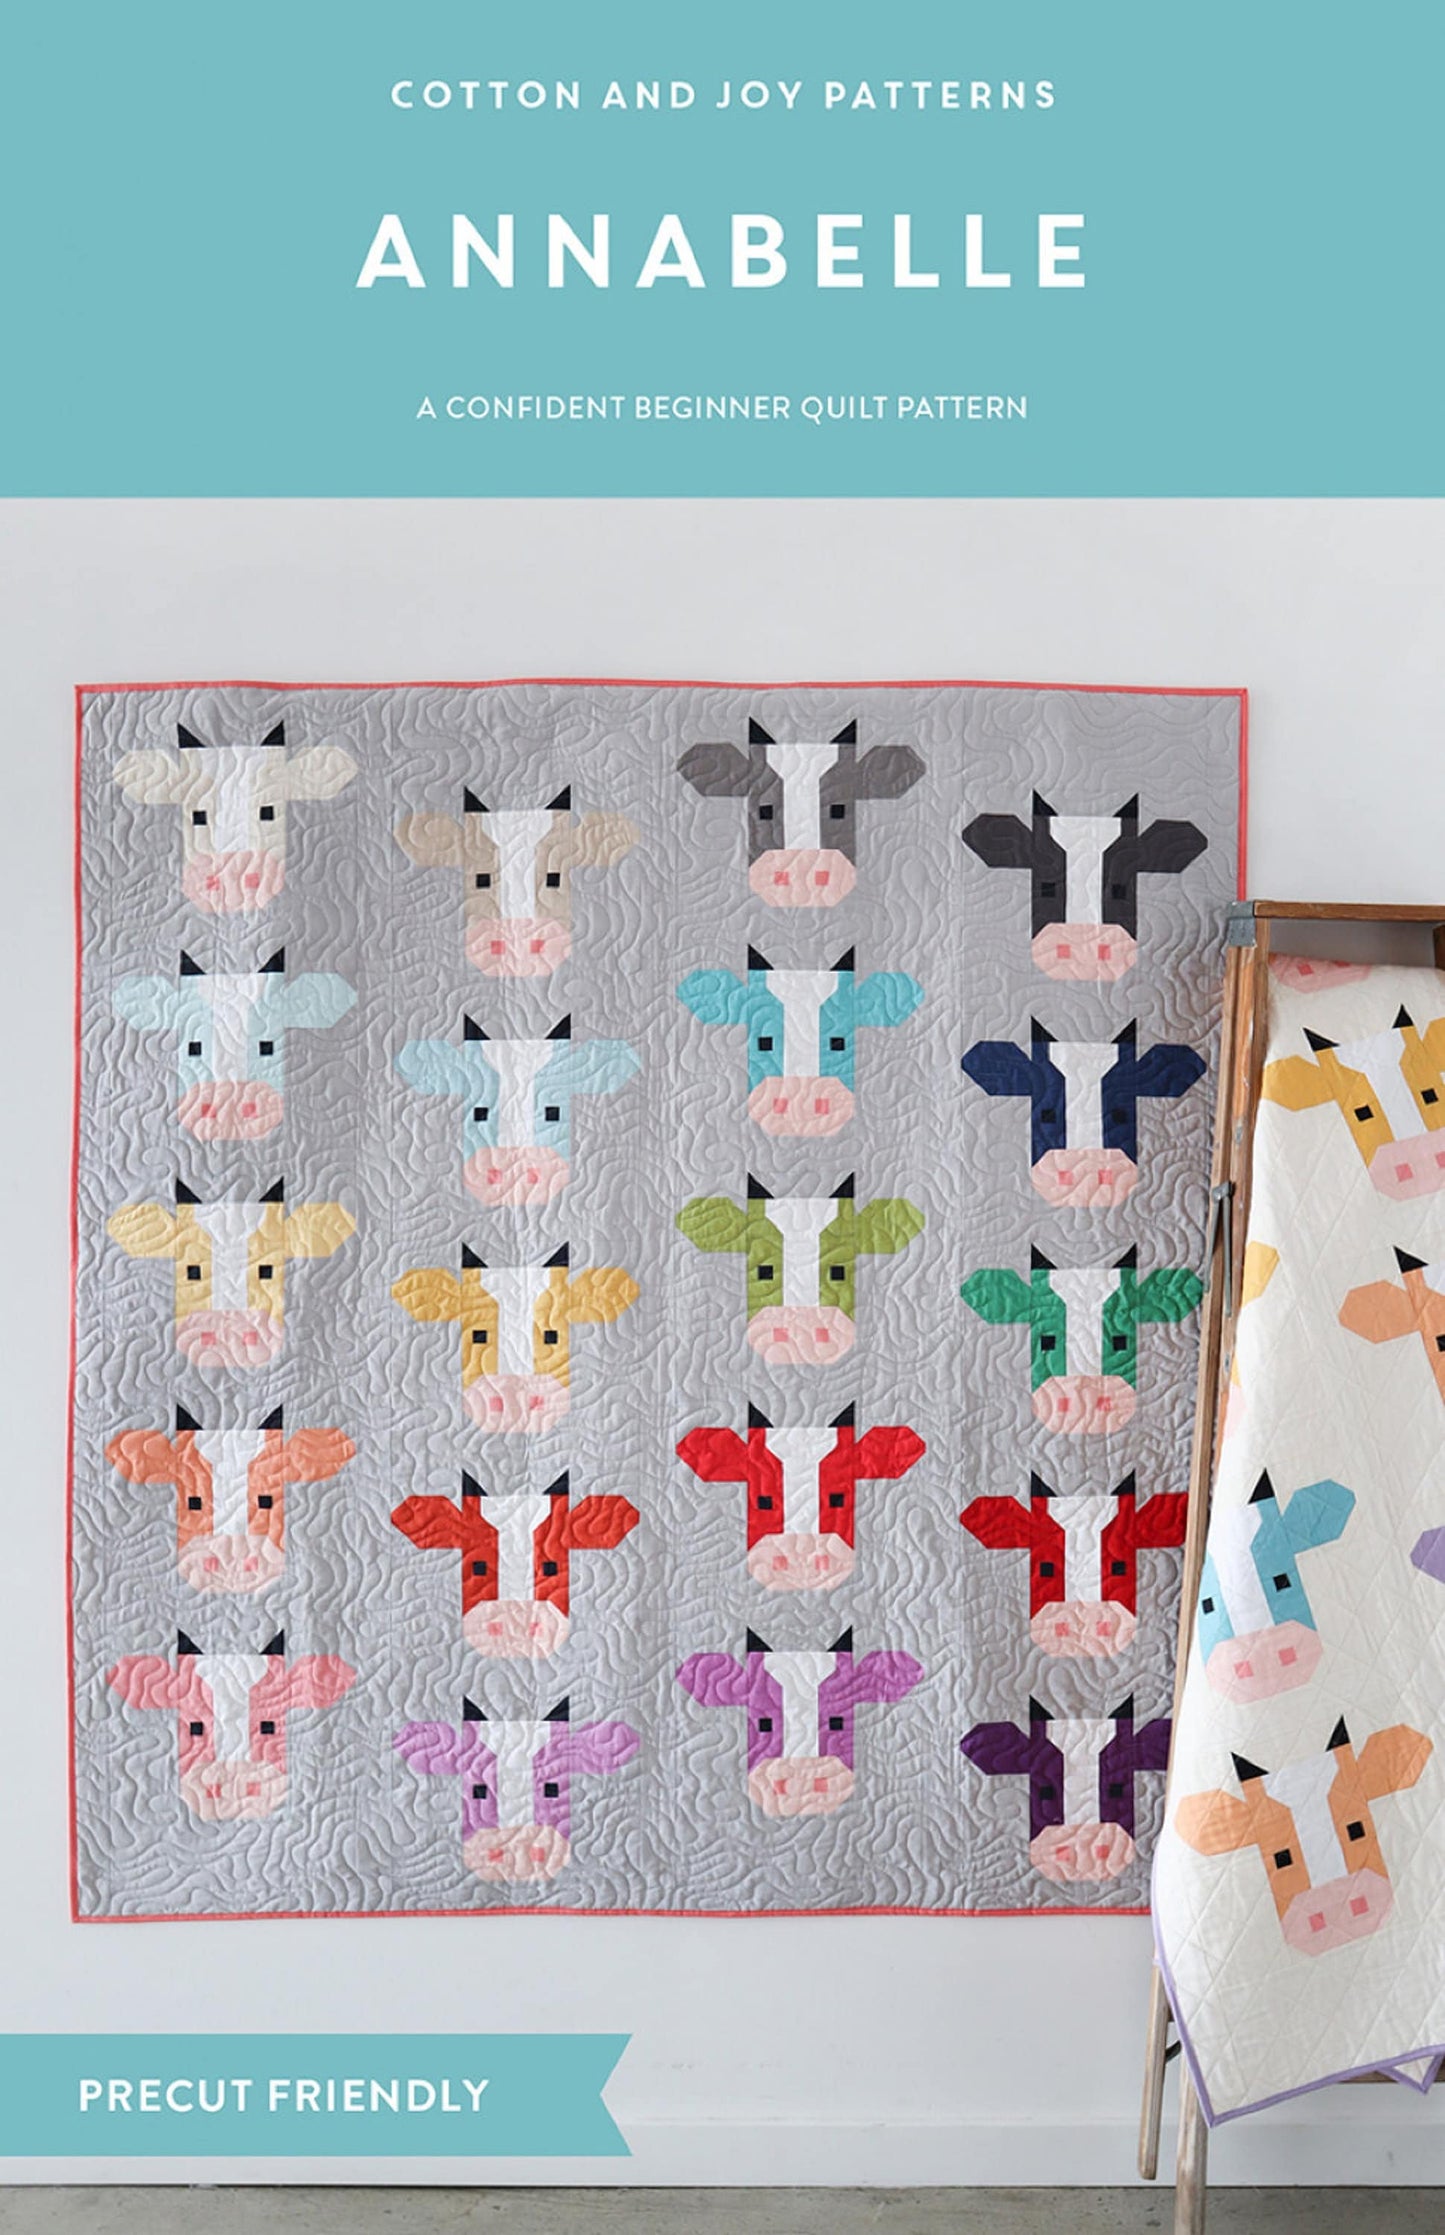 Annabelle Quilt Pattern - Cotton And Joy Patterns - 3 Sizes Options - Confident Beginner